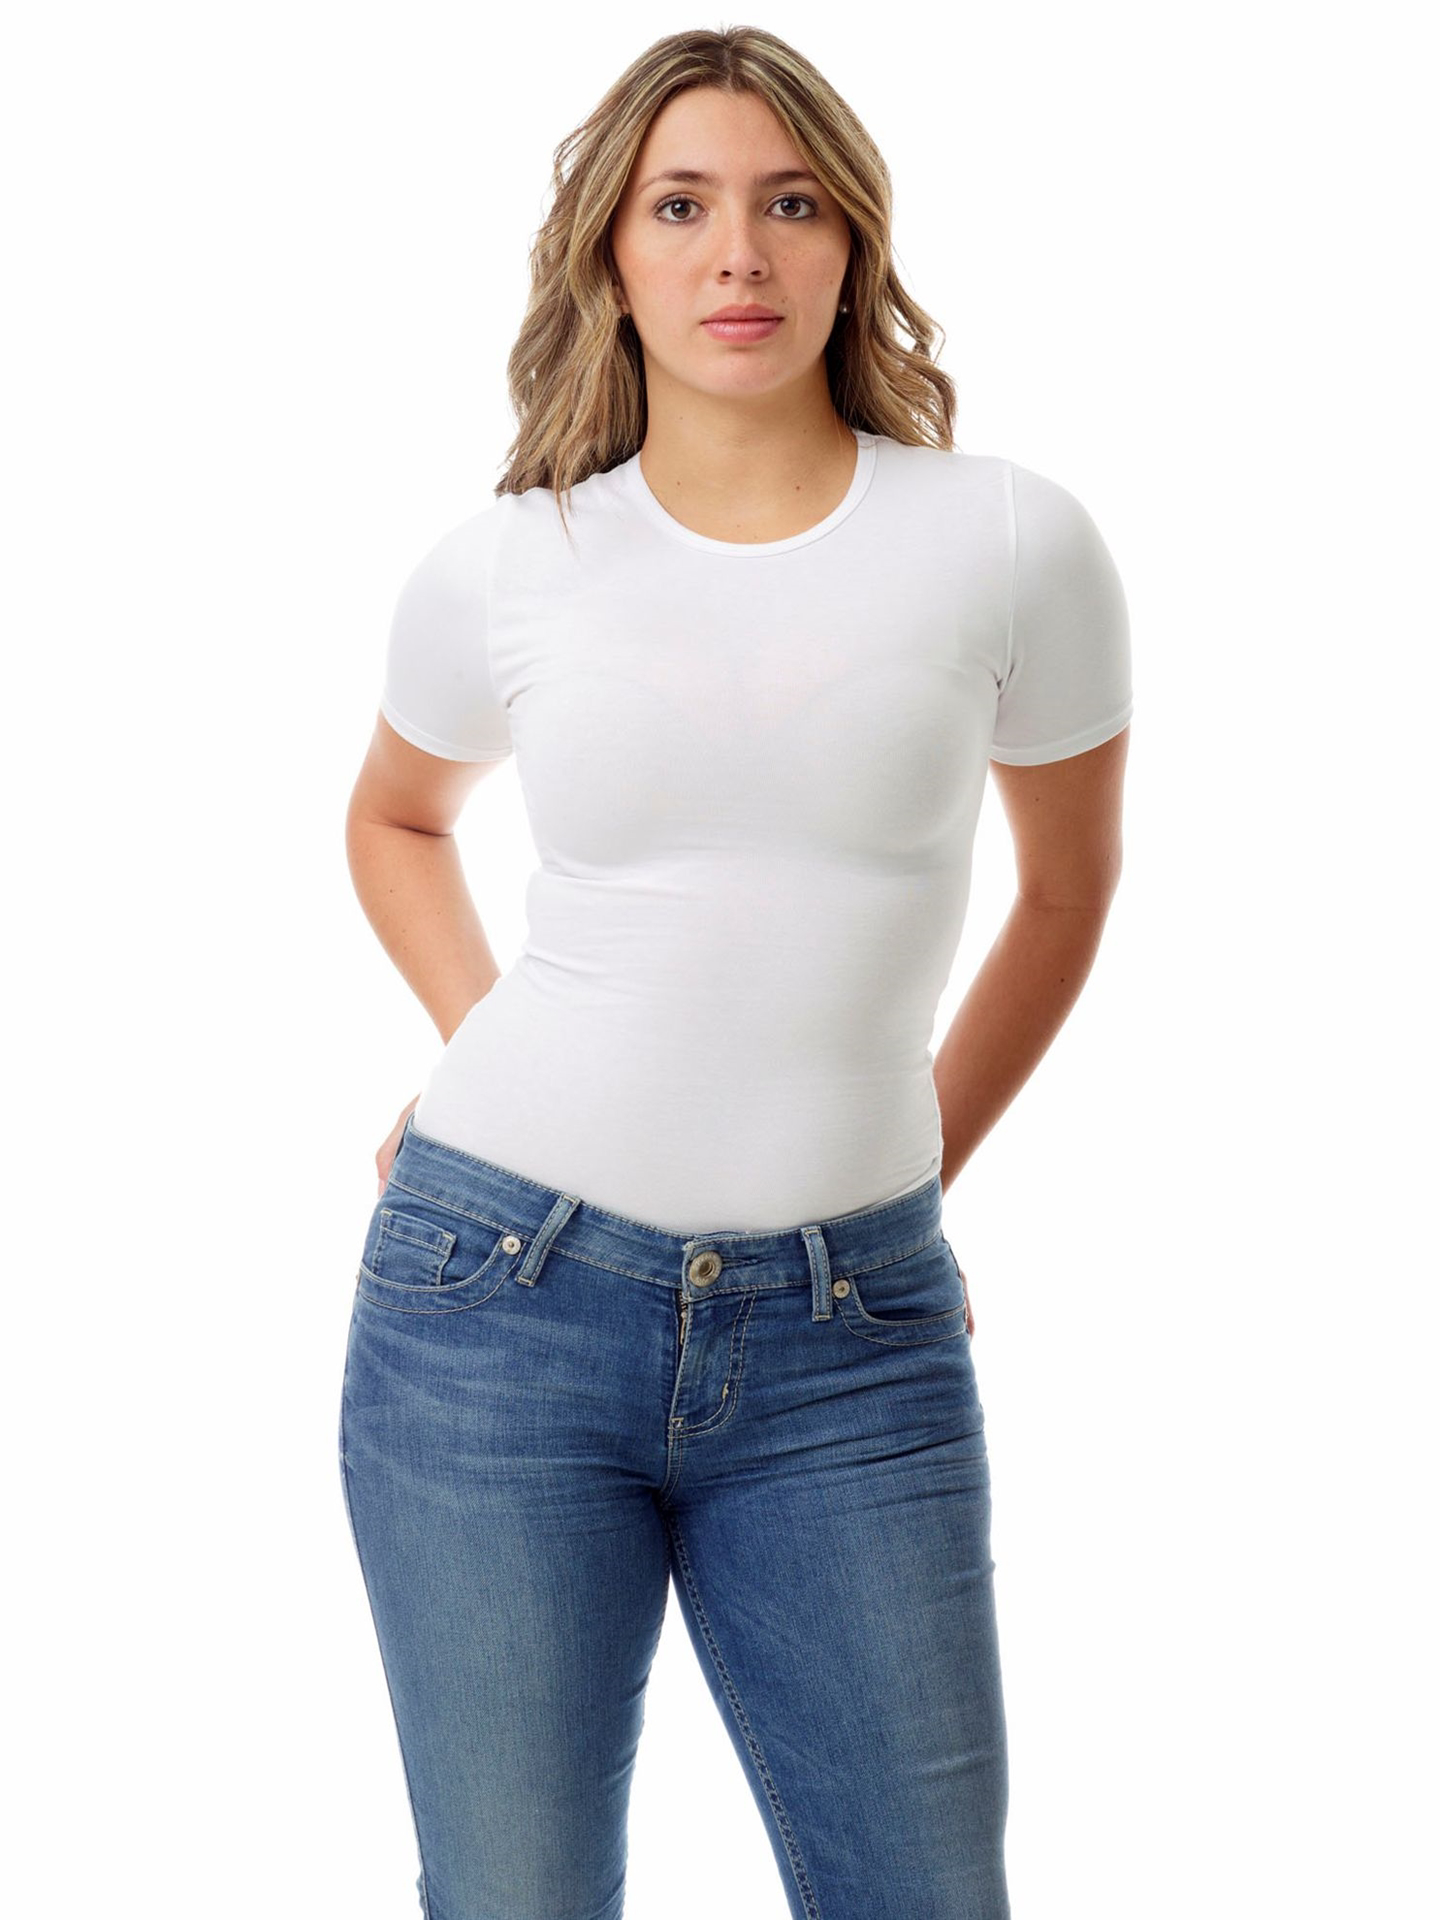 Women's Ultra Light Cotton Spandex Compression Crew Neck T-shirt. Men ...